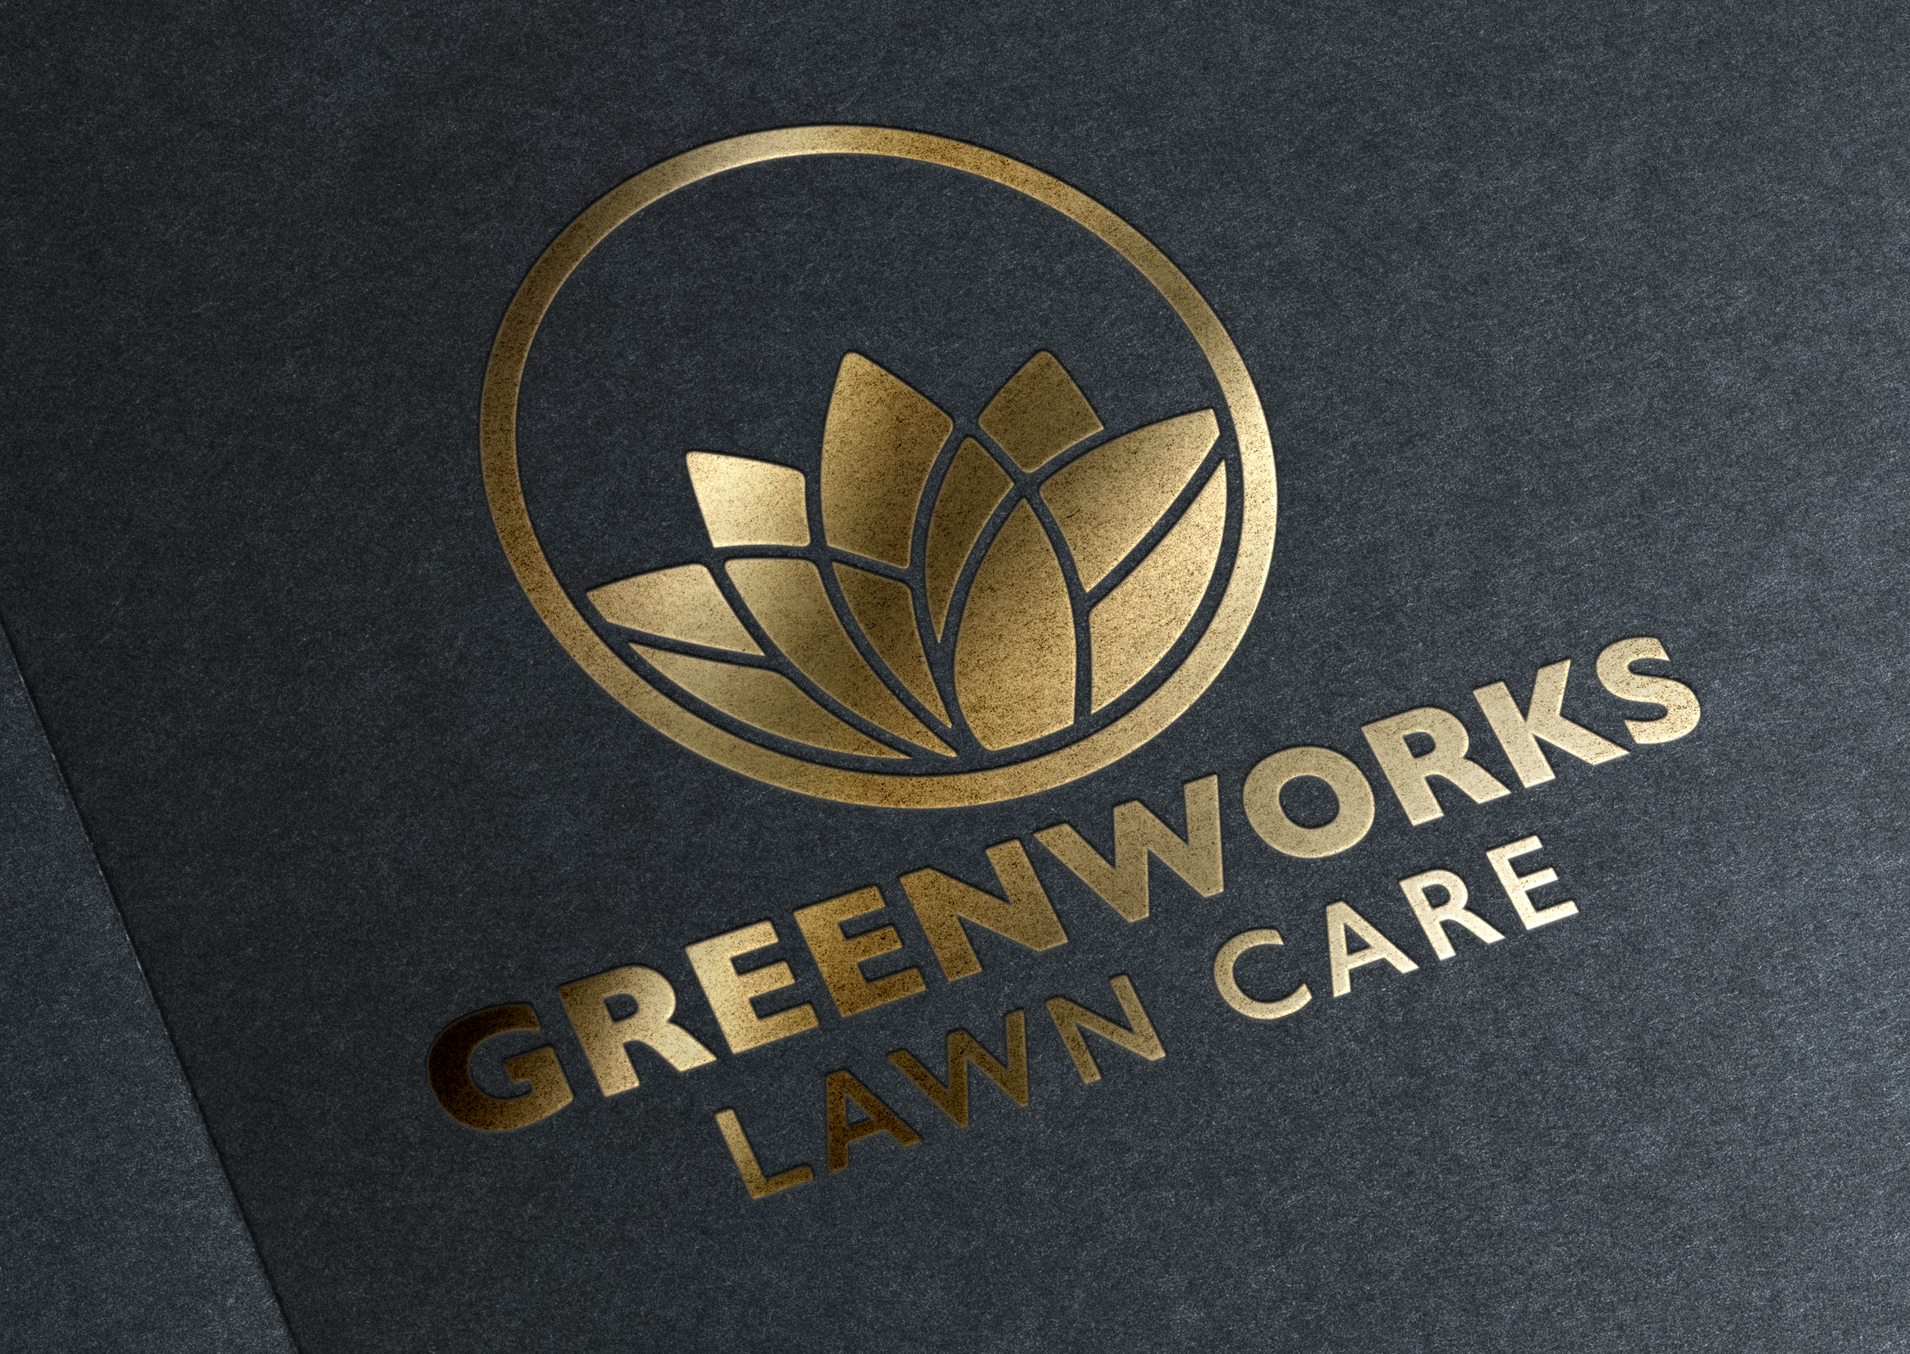 Landscaping Business Logo Design | Professional Landscaping | Landscaping Business | Lawn Care Business | Company | Lawn Maintenance Logo